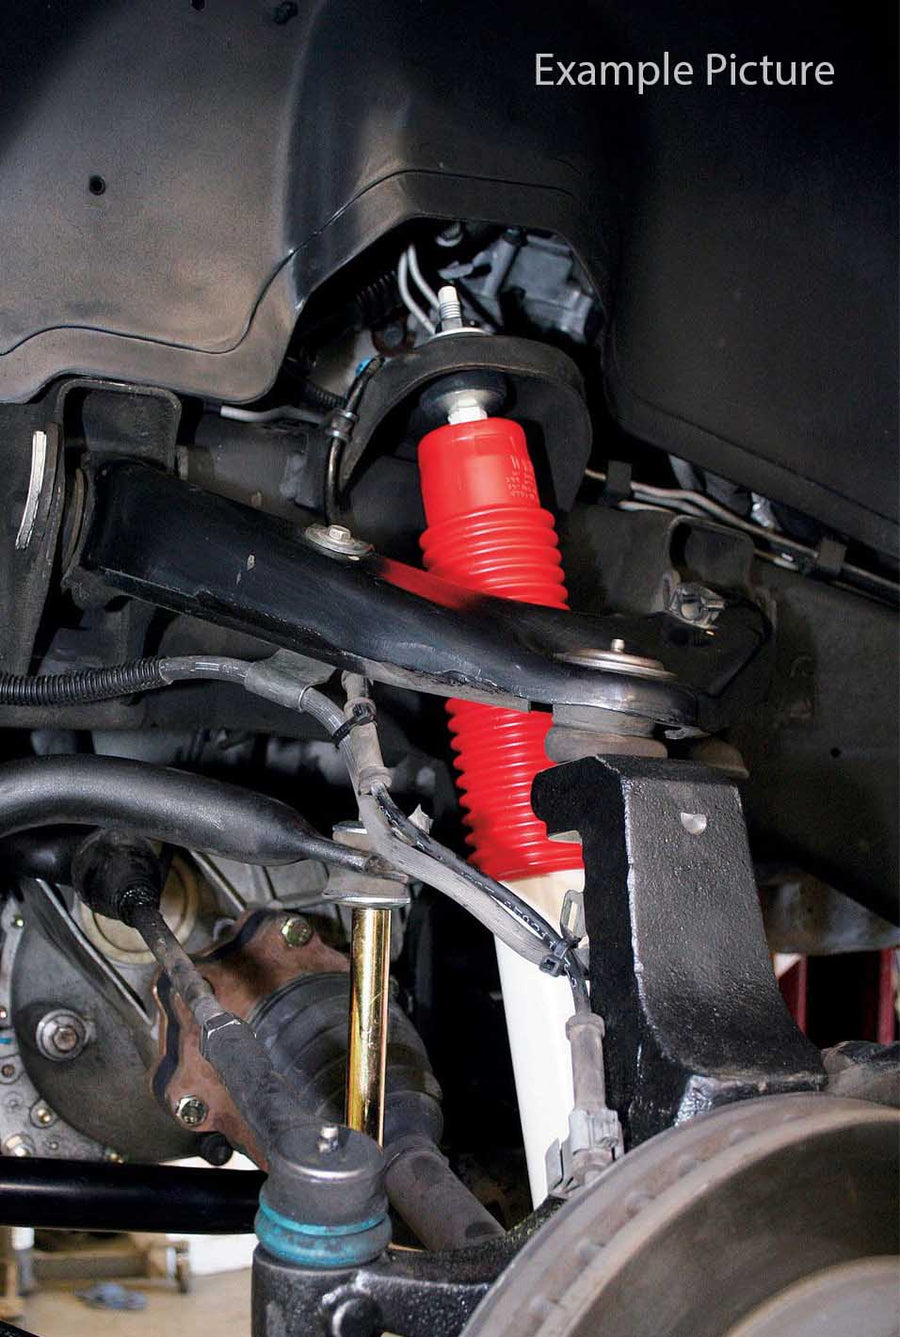 Rancho RS5000X Gas Shocks Rear Pair for 1980-1996 Ford Bronco 4WD w/1-4" lift